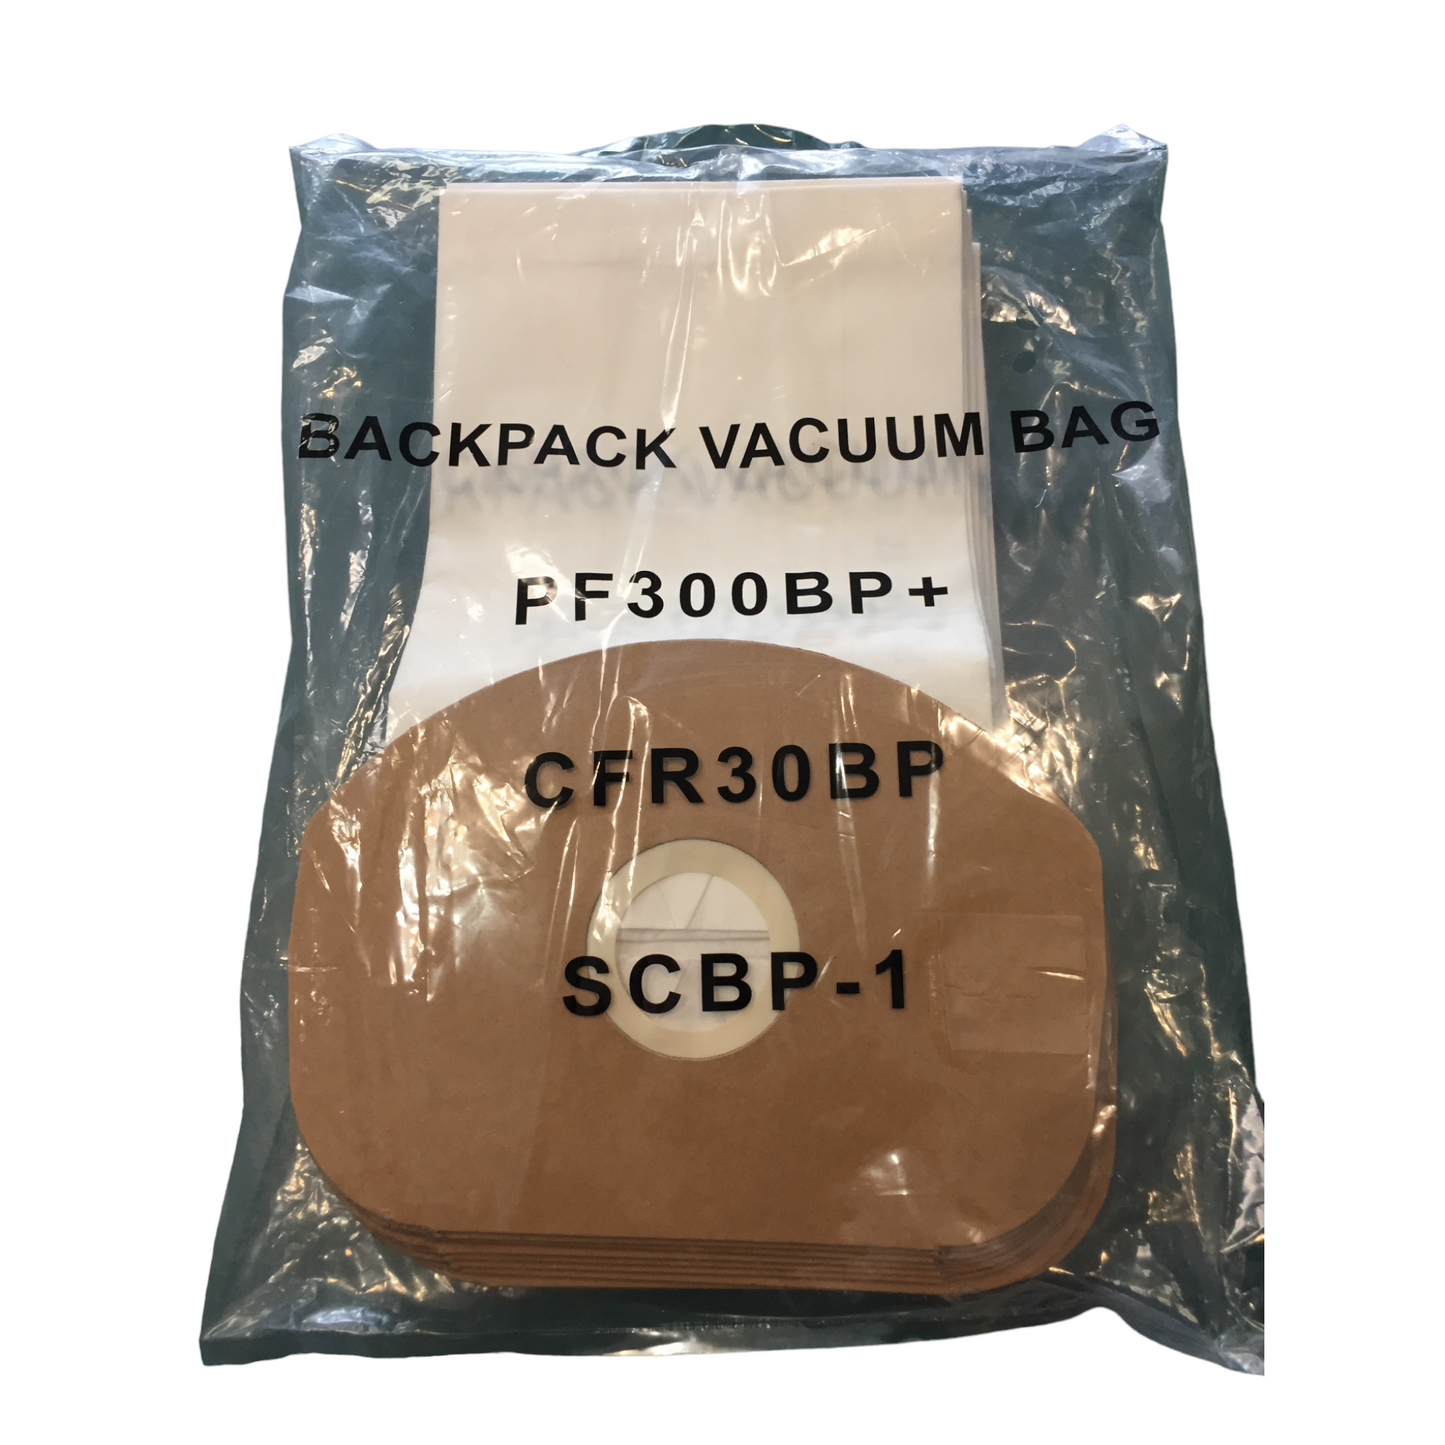 Carpet Pro Replacement Backpack Vacuum Bags - 10 Pack